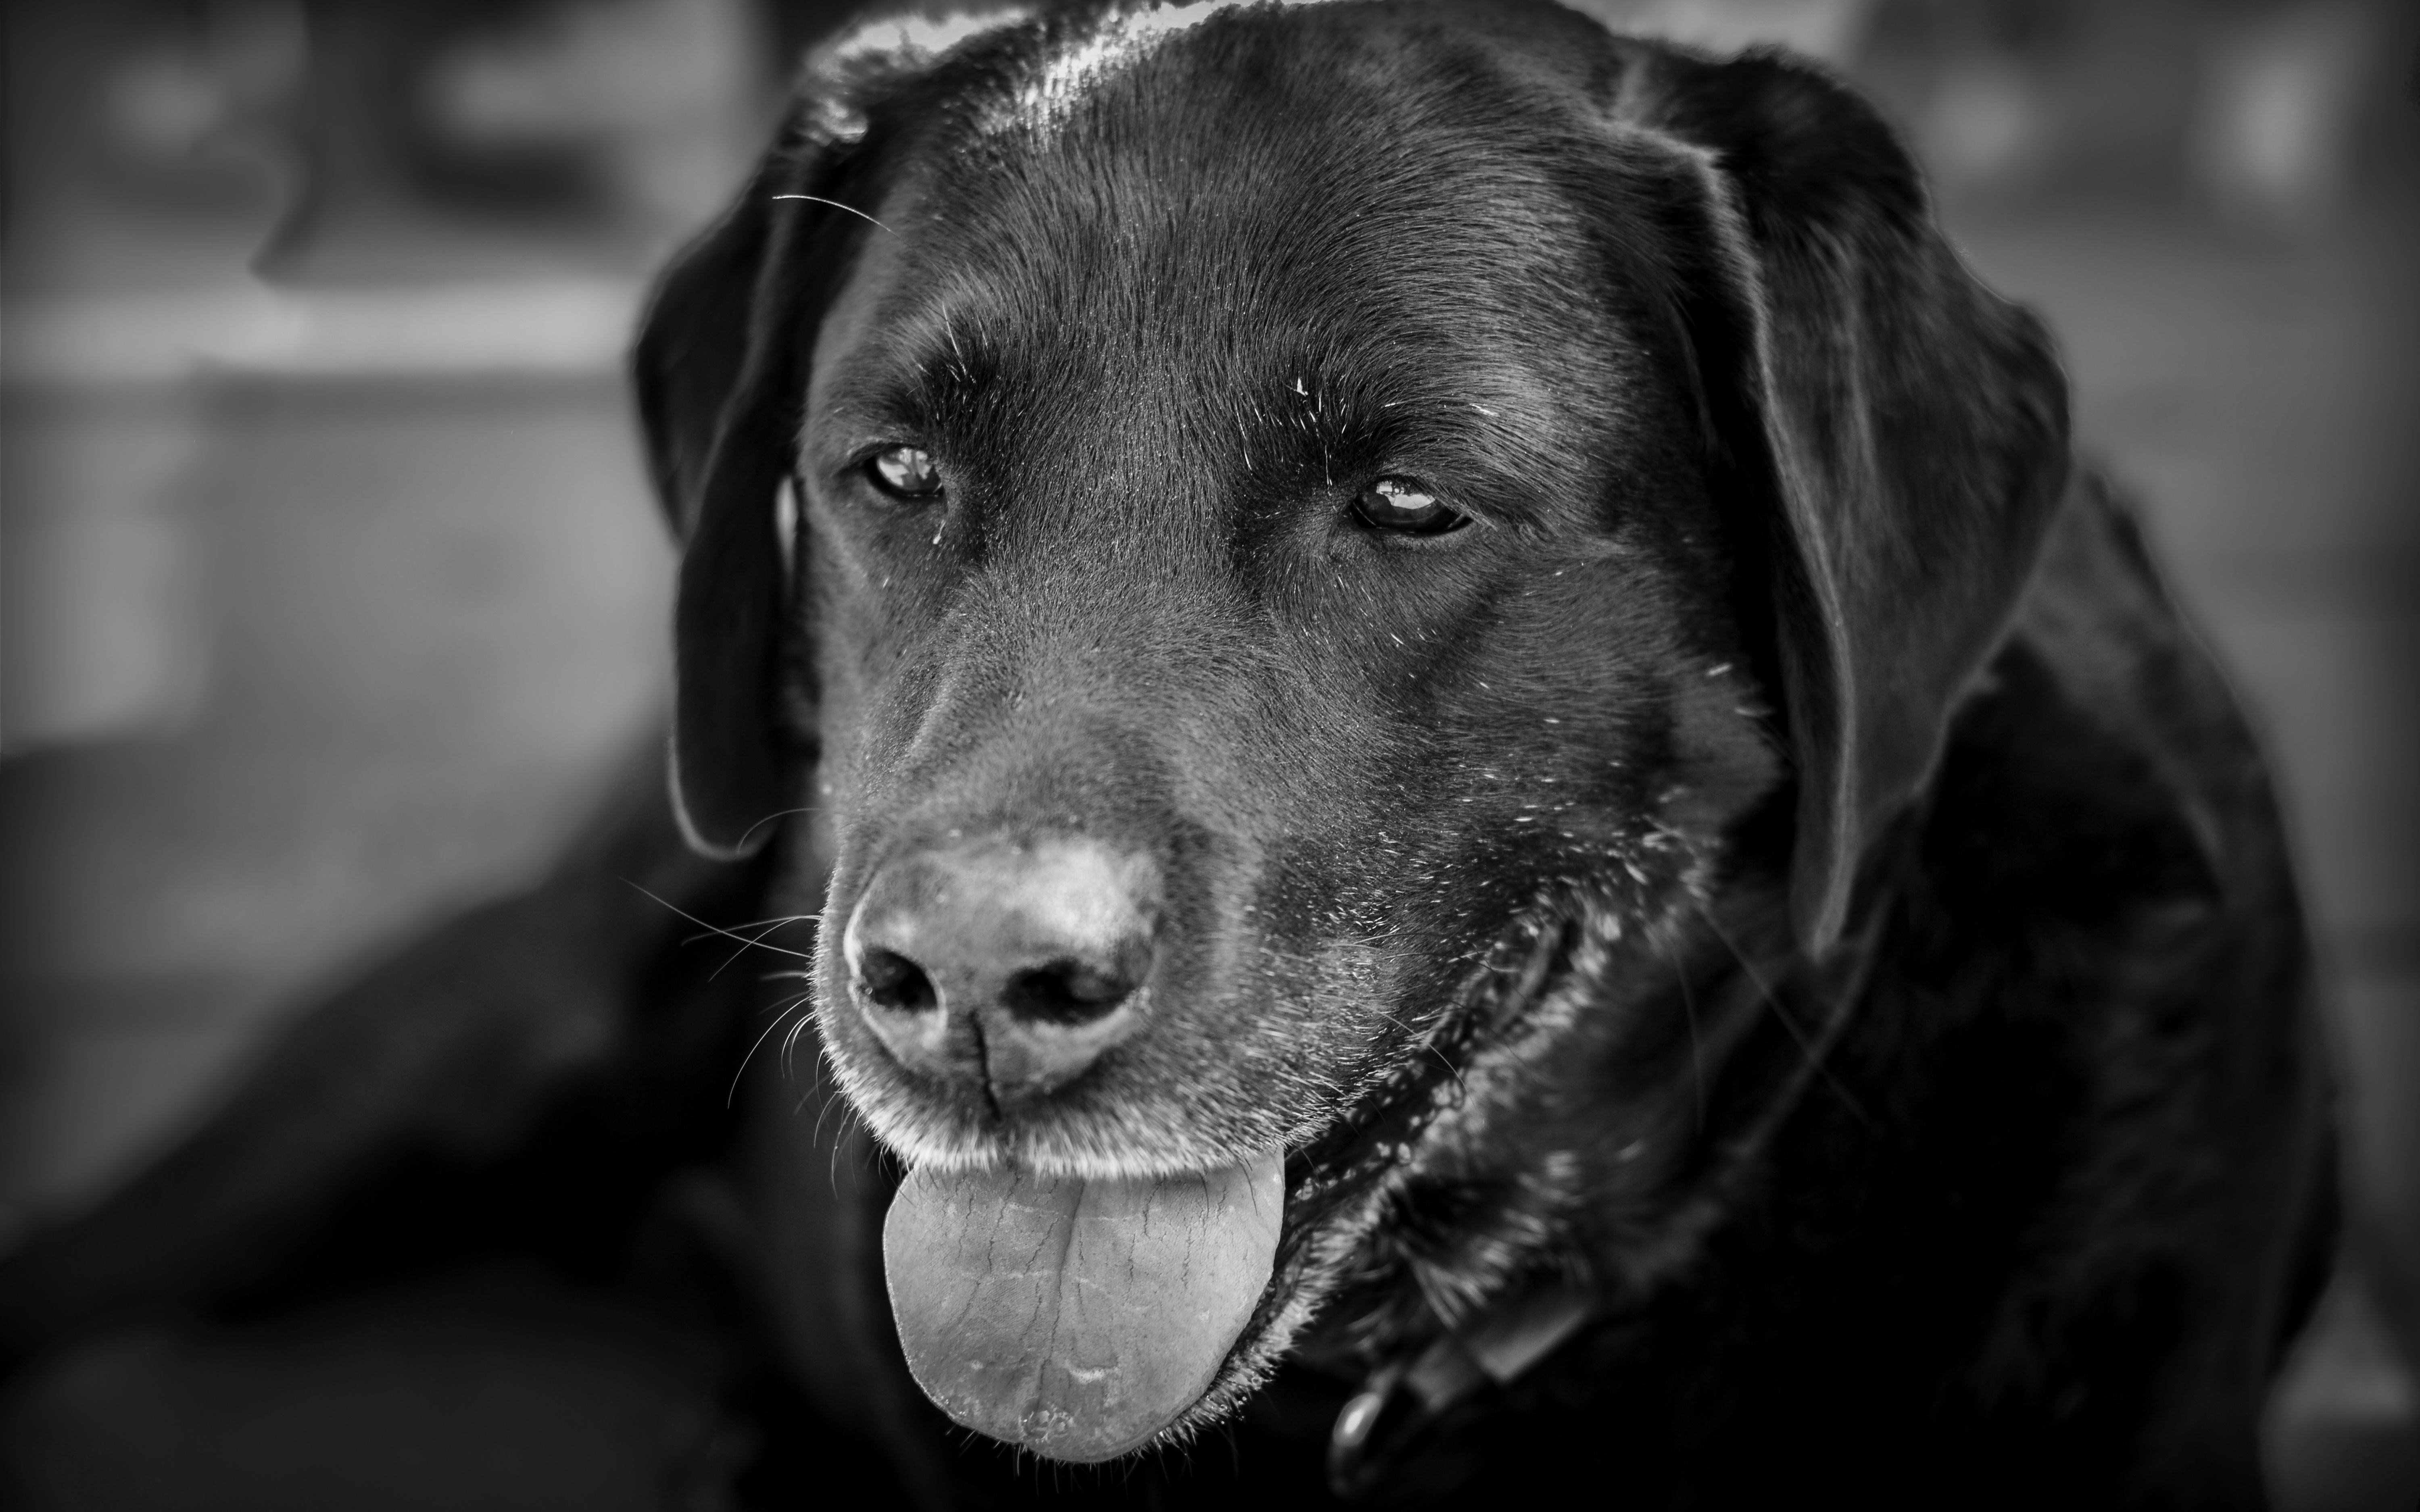 Labrador retriever in monochrome photo